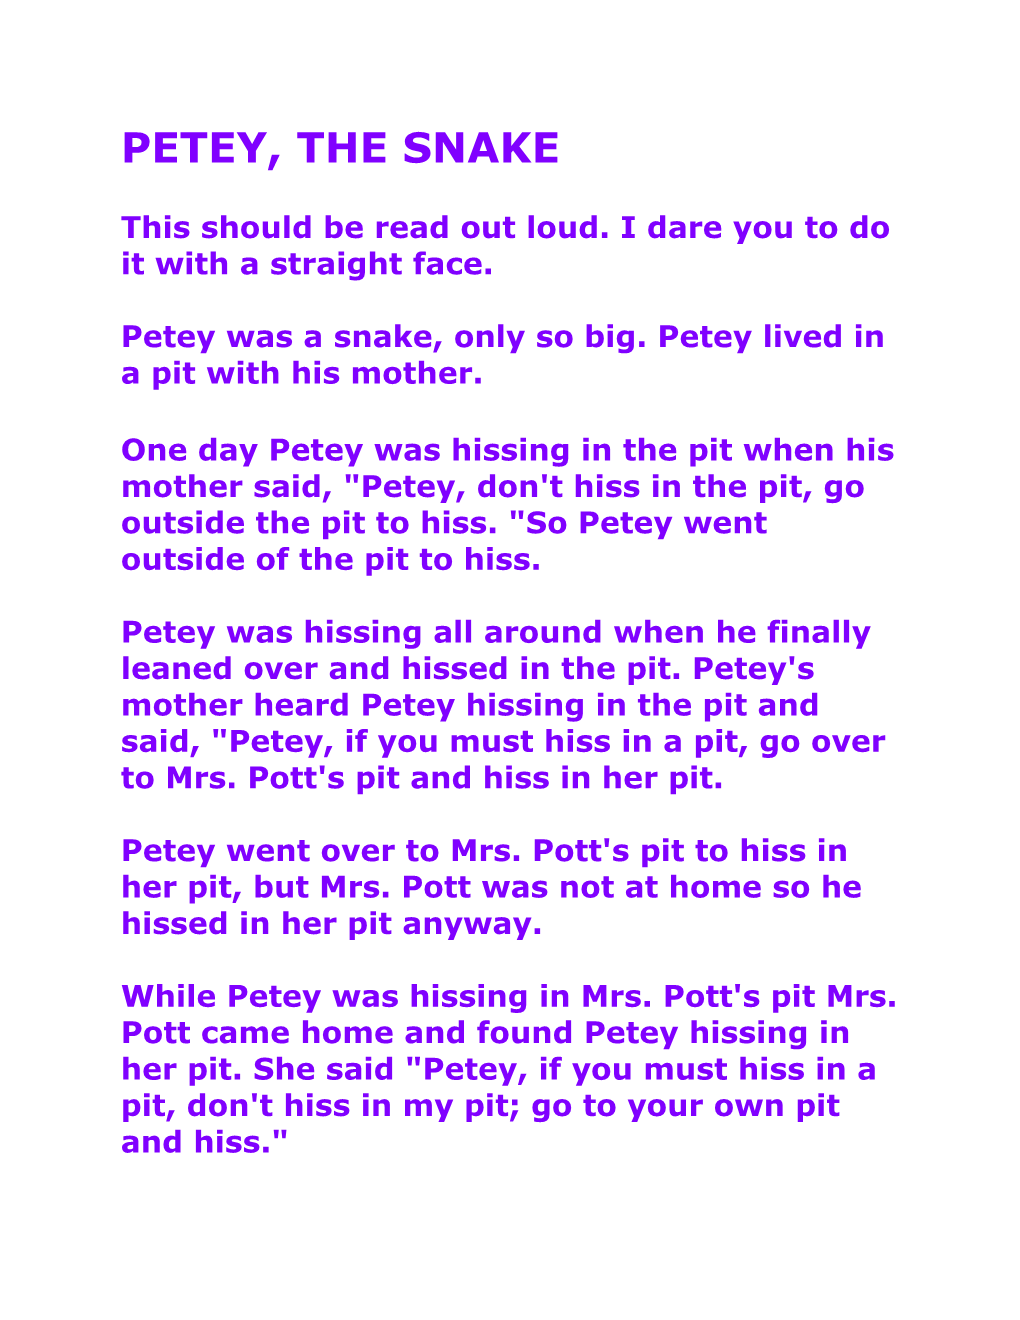 Petey, the Snake